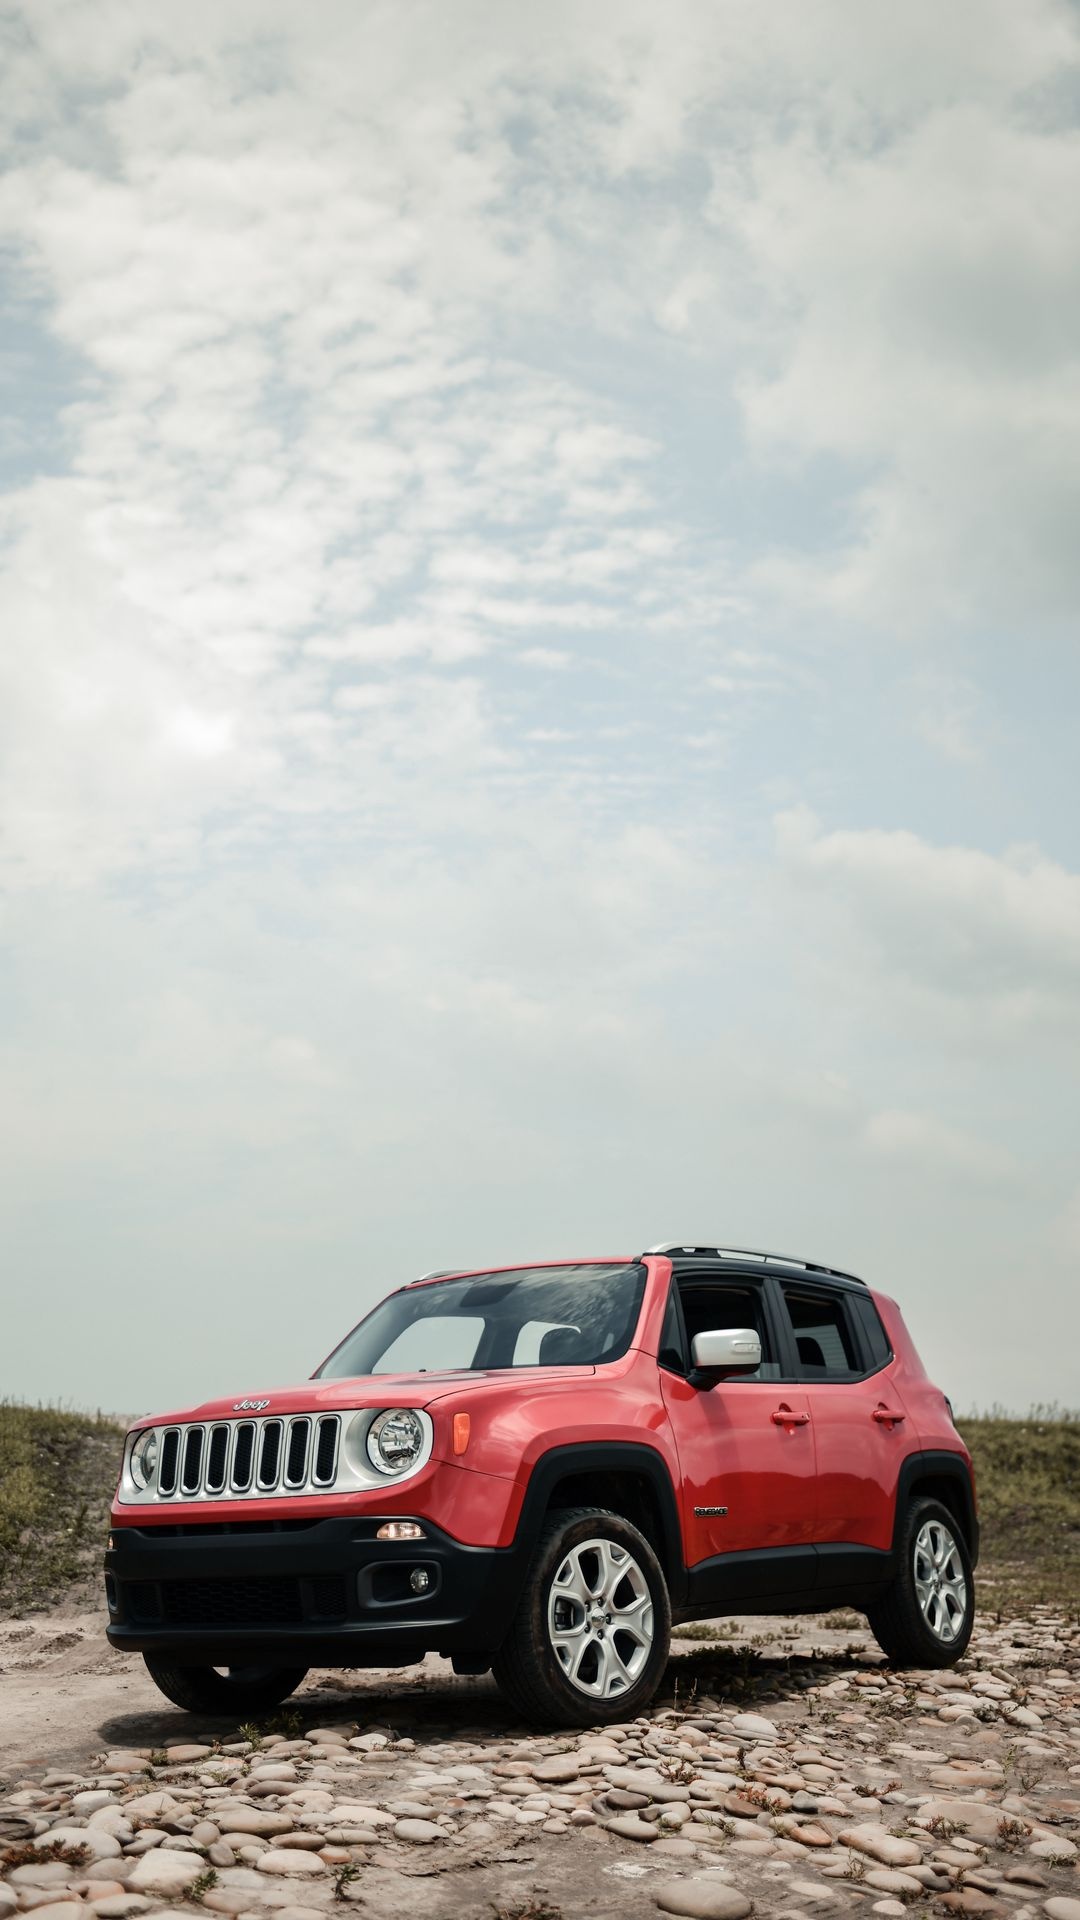 Jeep Renegade, Best phone wallpaper, Representing adventure, Off-road capabilities, 1080x1920 Full HD Phone